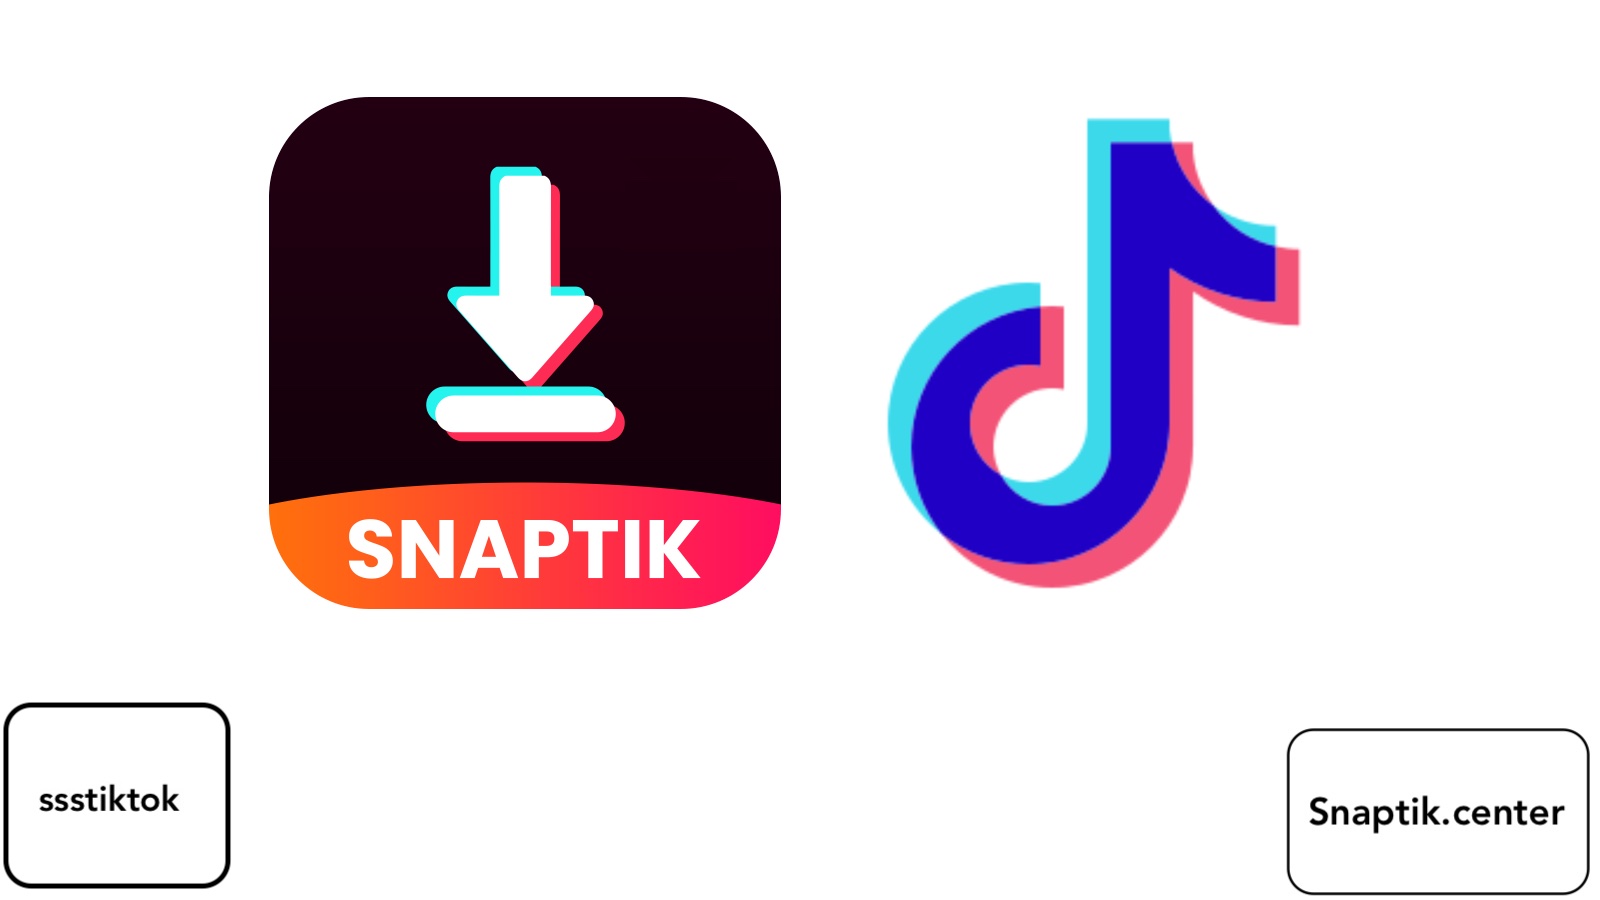 How Snaptik and Sstiktok Video Downloader Inspire Creativity